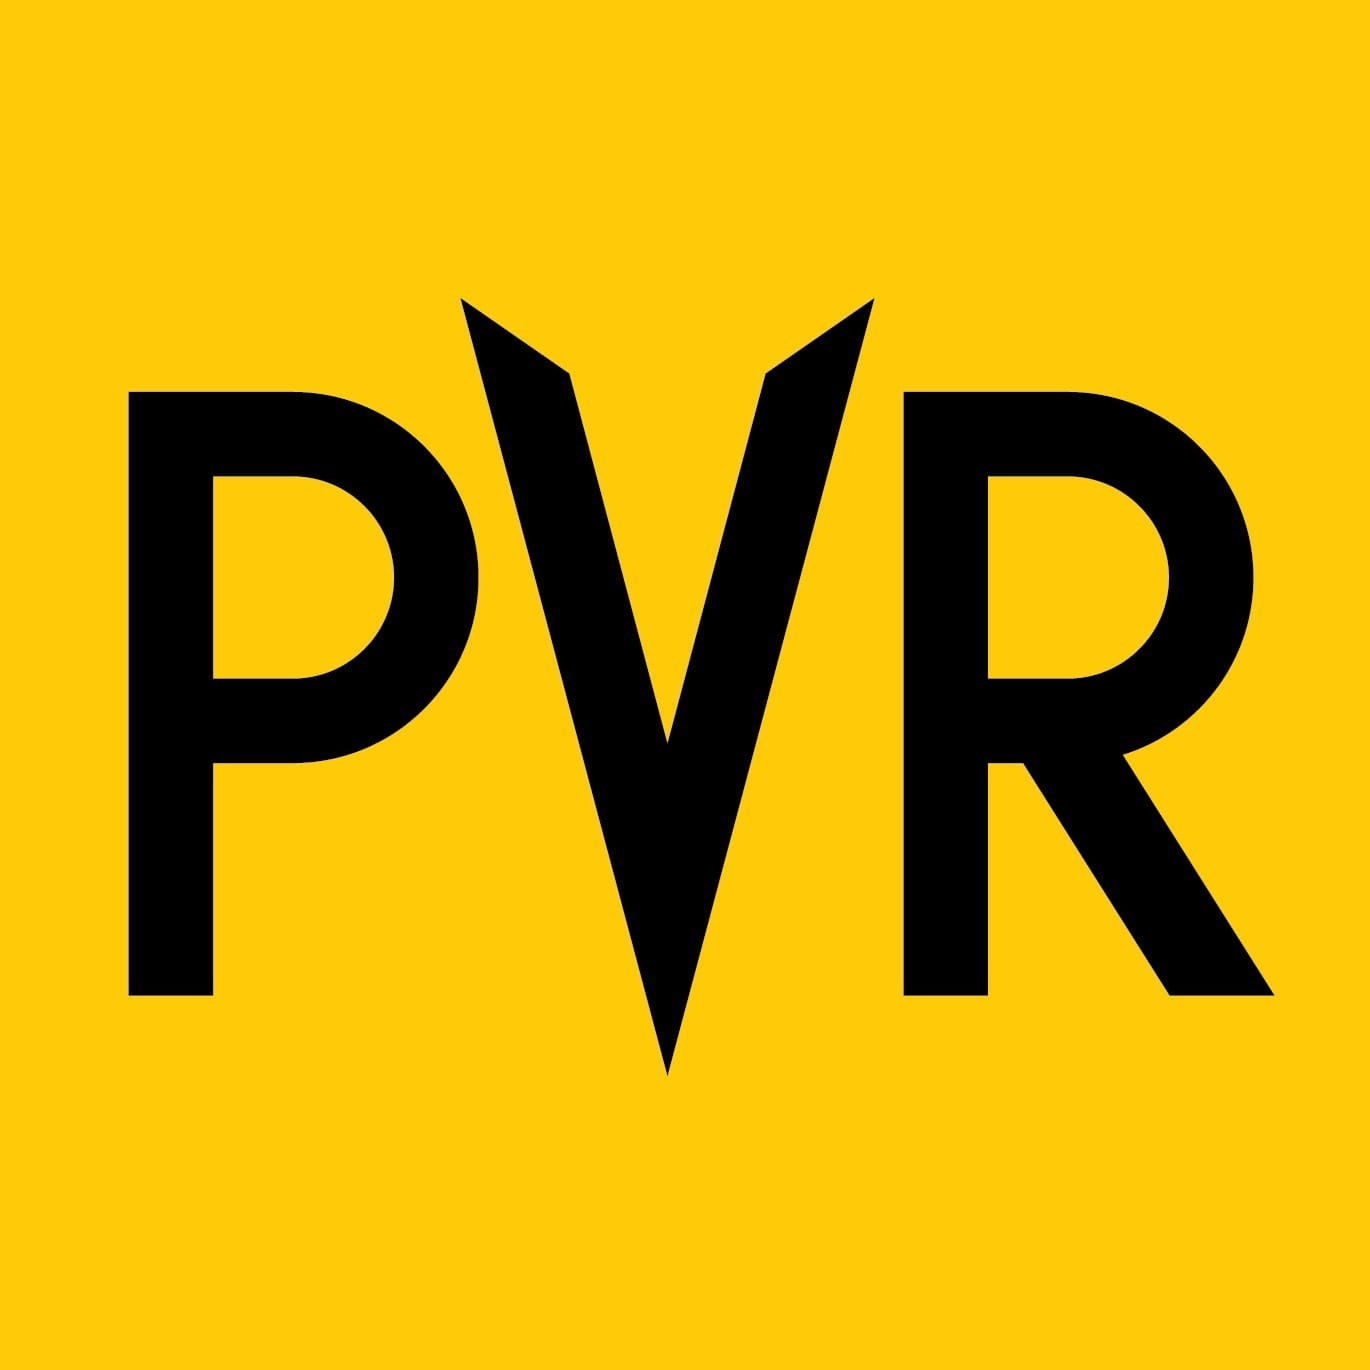 PVR Directors Cut|Movie Theater|Entertainment